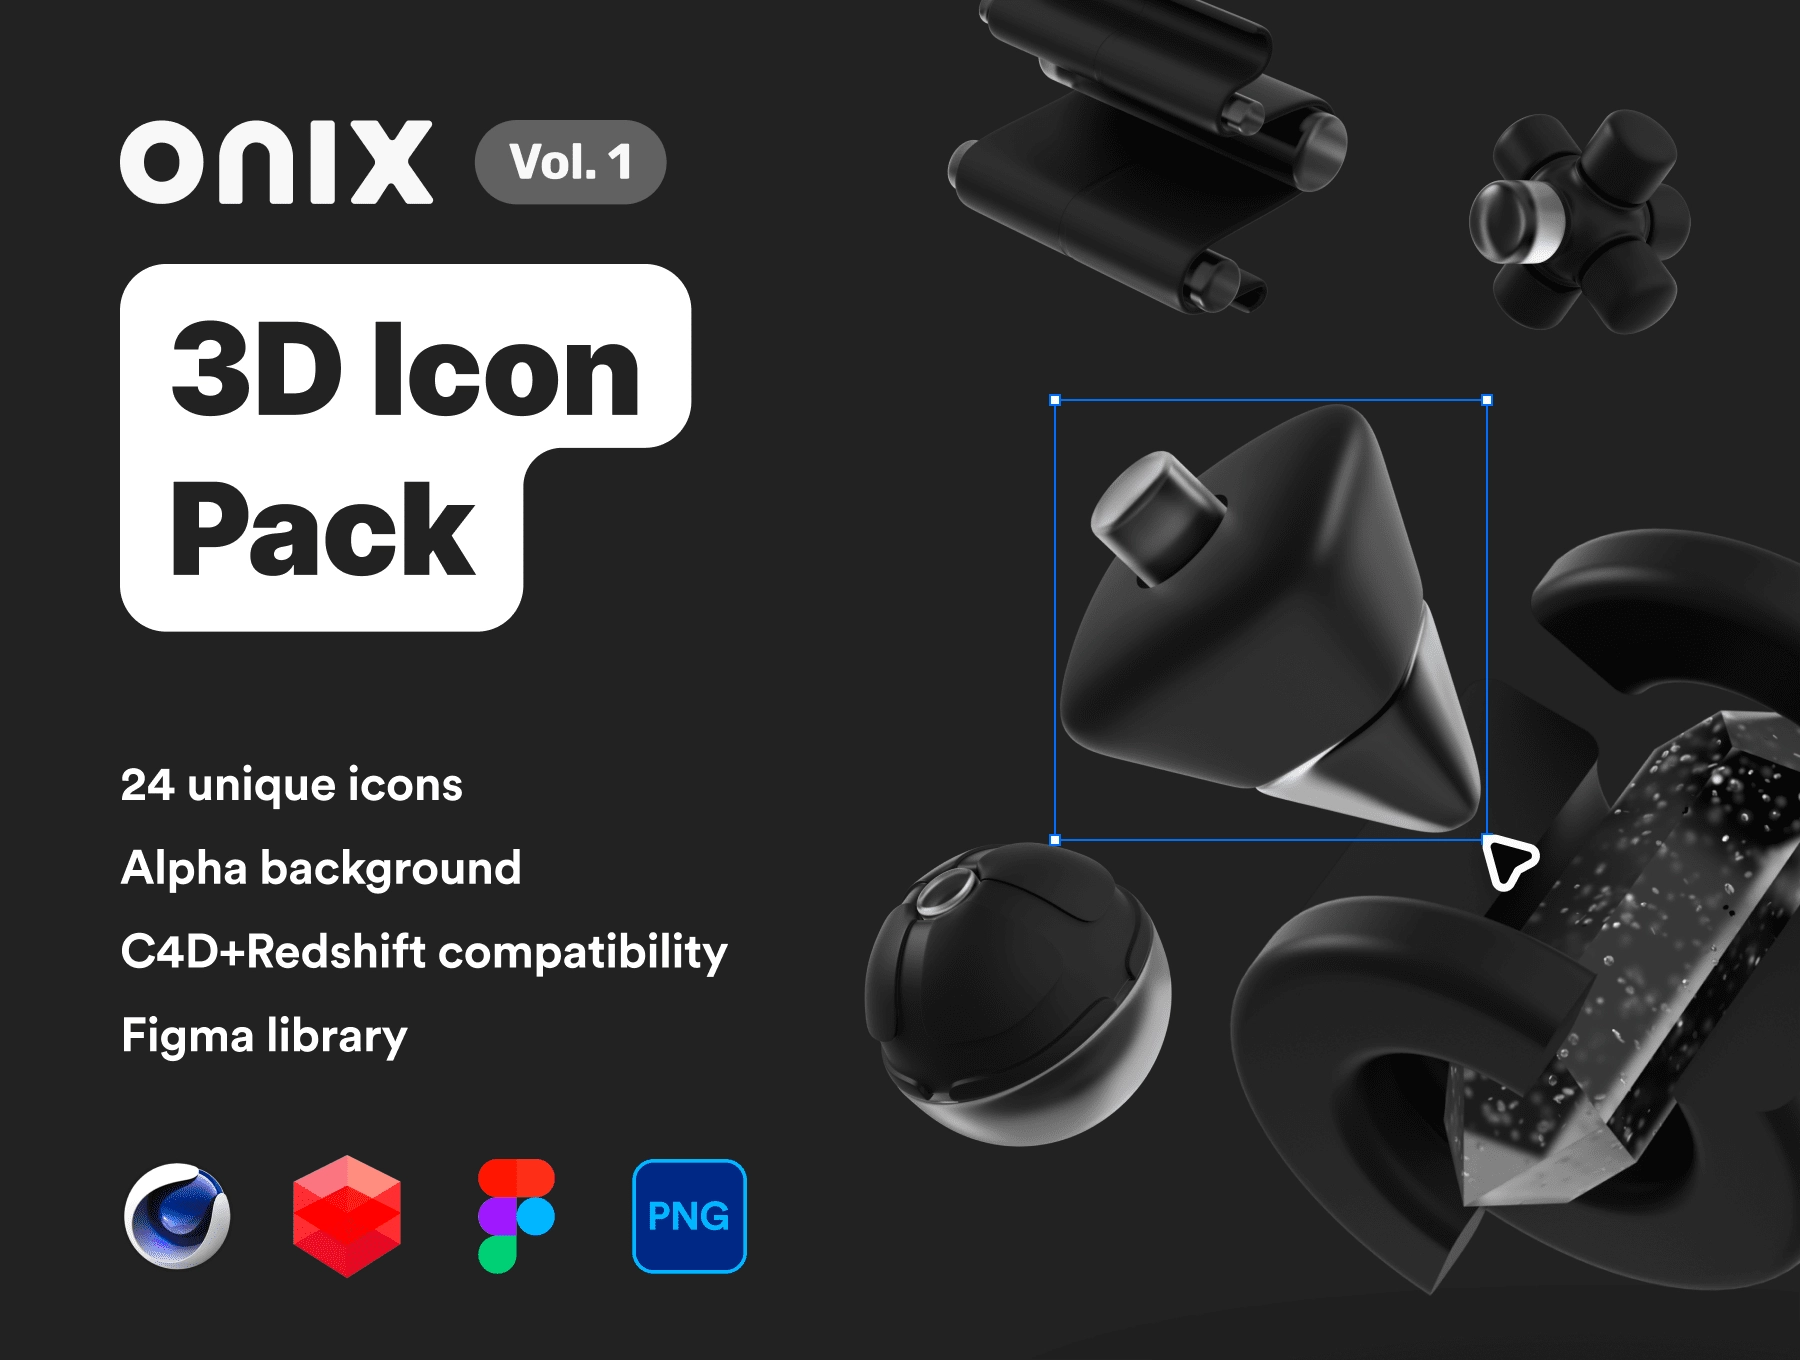 [VIP] Onix: Vol. 1 3D Icon Pack